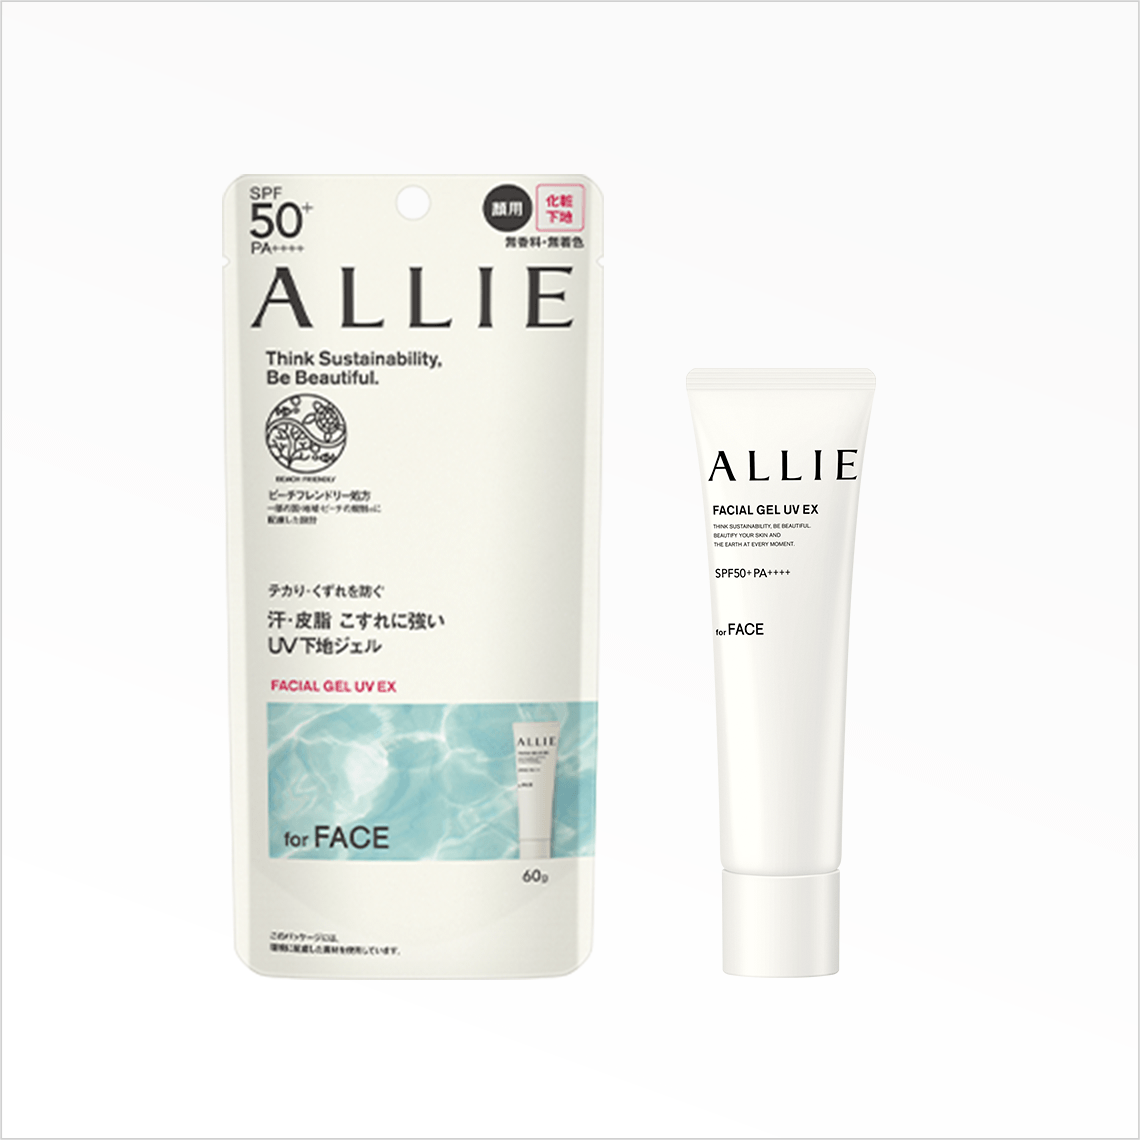 Allie Chrono Beauty Facial Gel UV EX 60g 嘉娜宝 Kanebo ALLIE 环保脸部专用防晒水凝乳EX SPF50+ PA++++ 60g  - MOMO E-Store